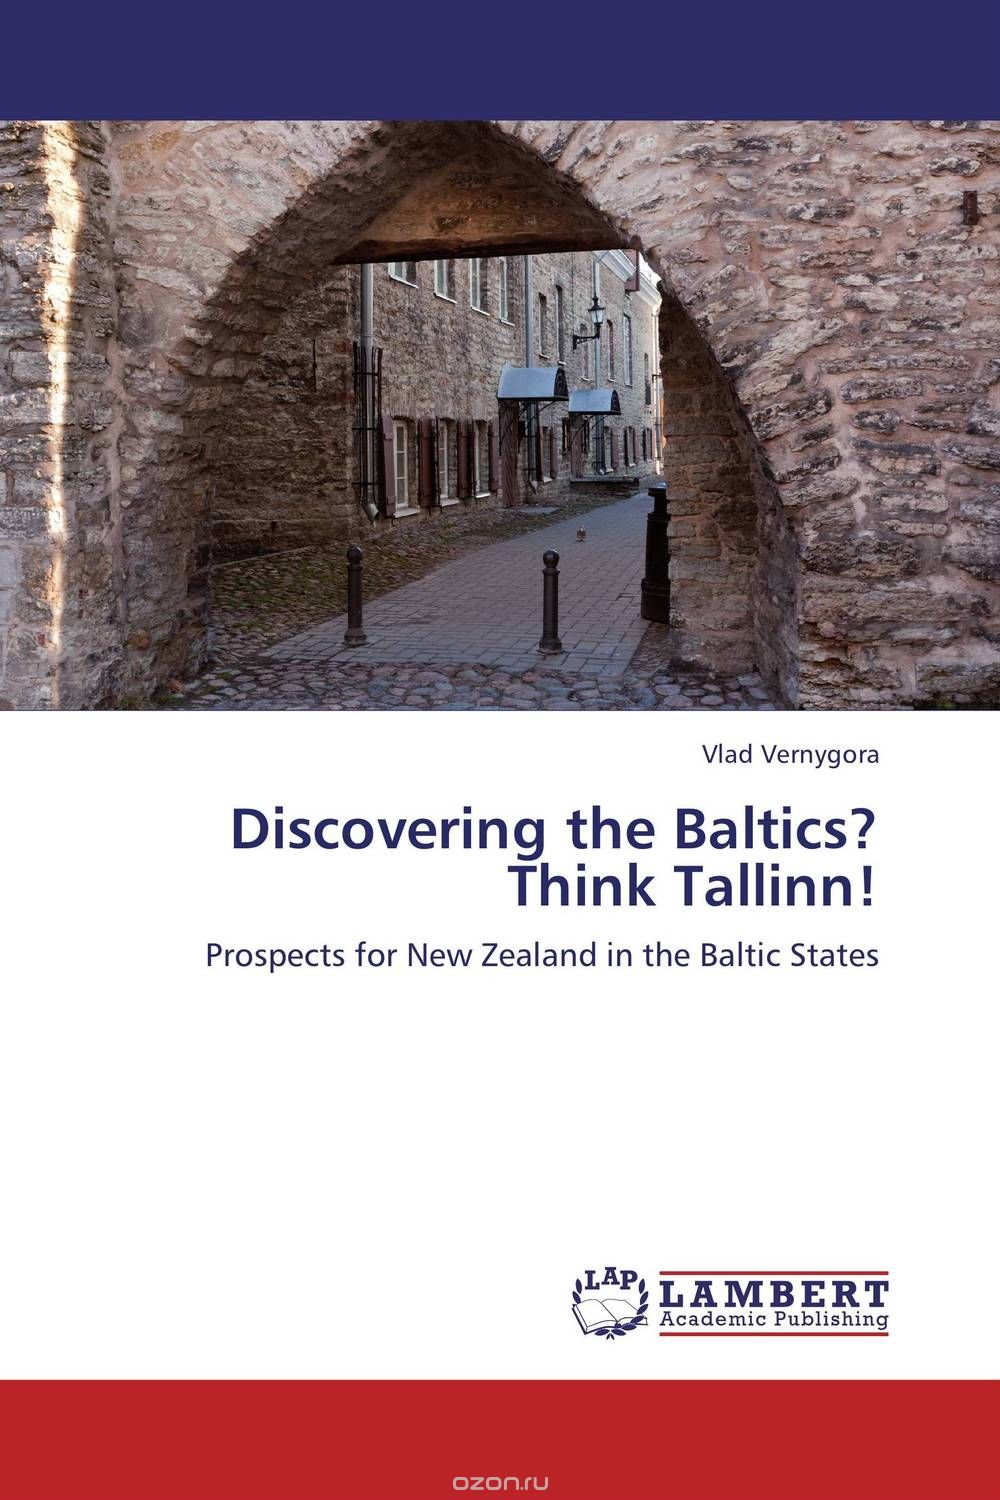 Скачать книгу "Discovering the Baltics? Think Tallinn!"